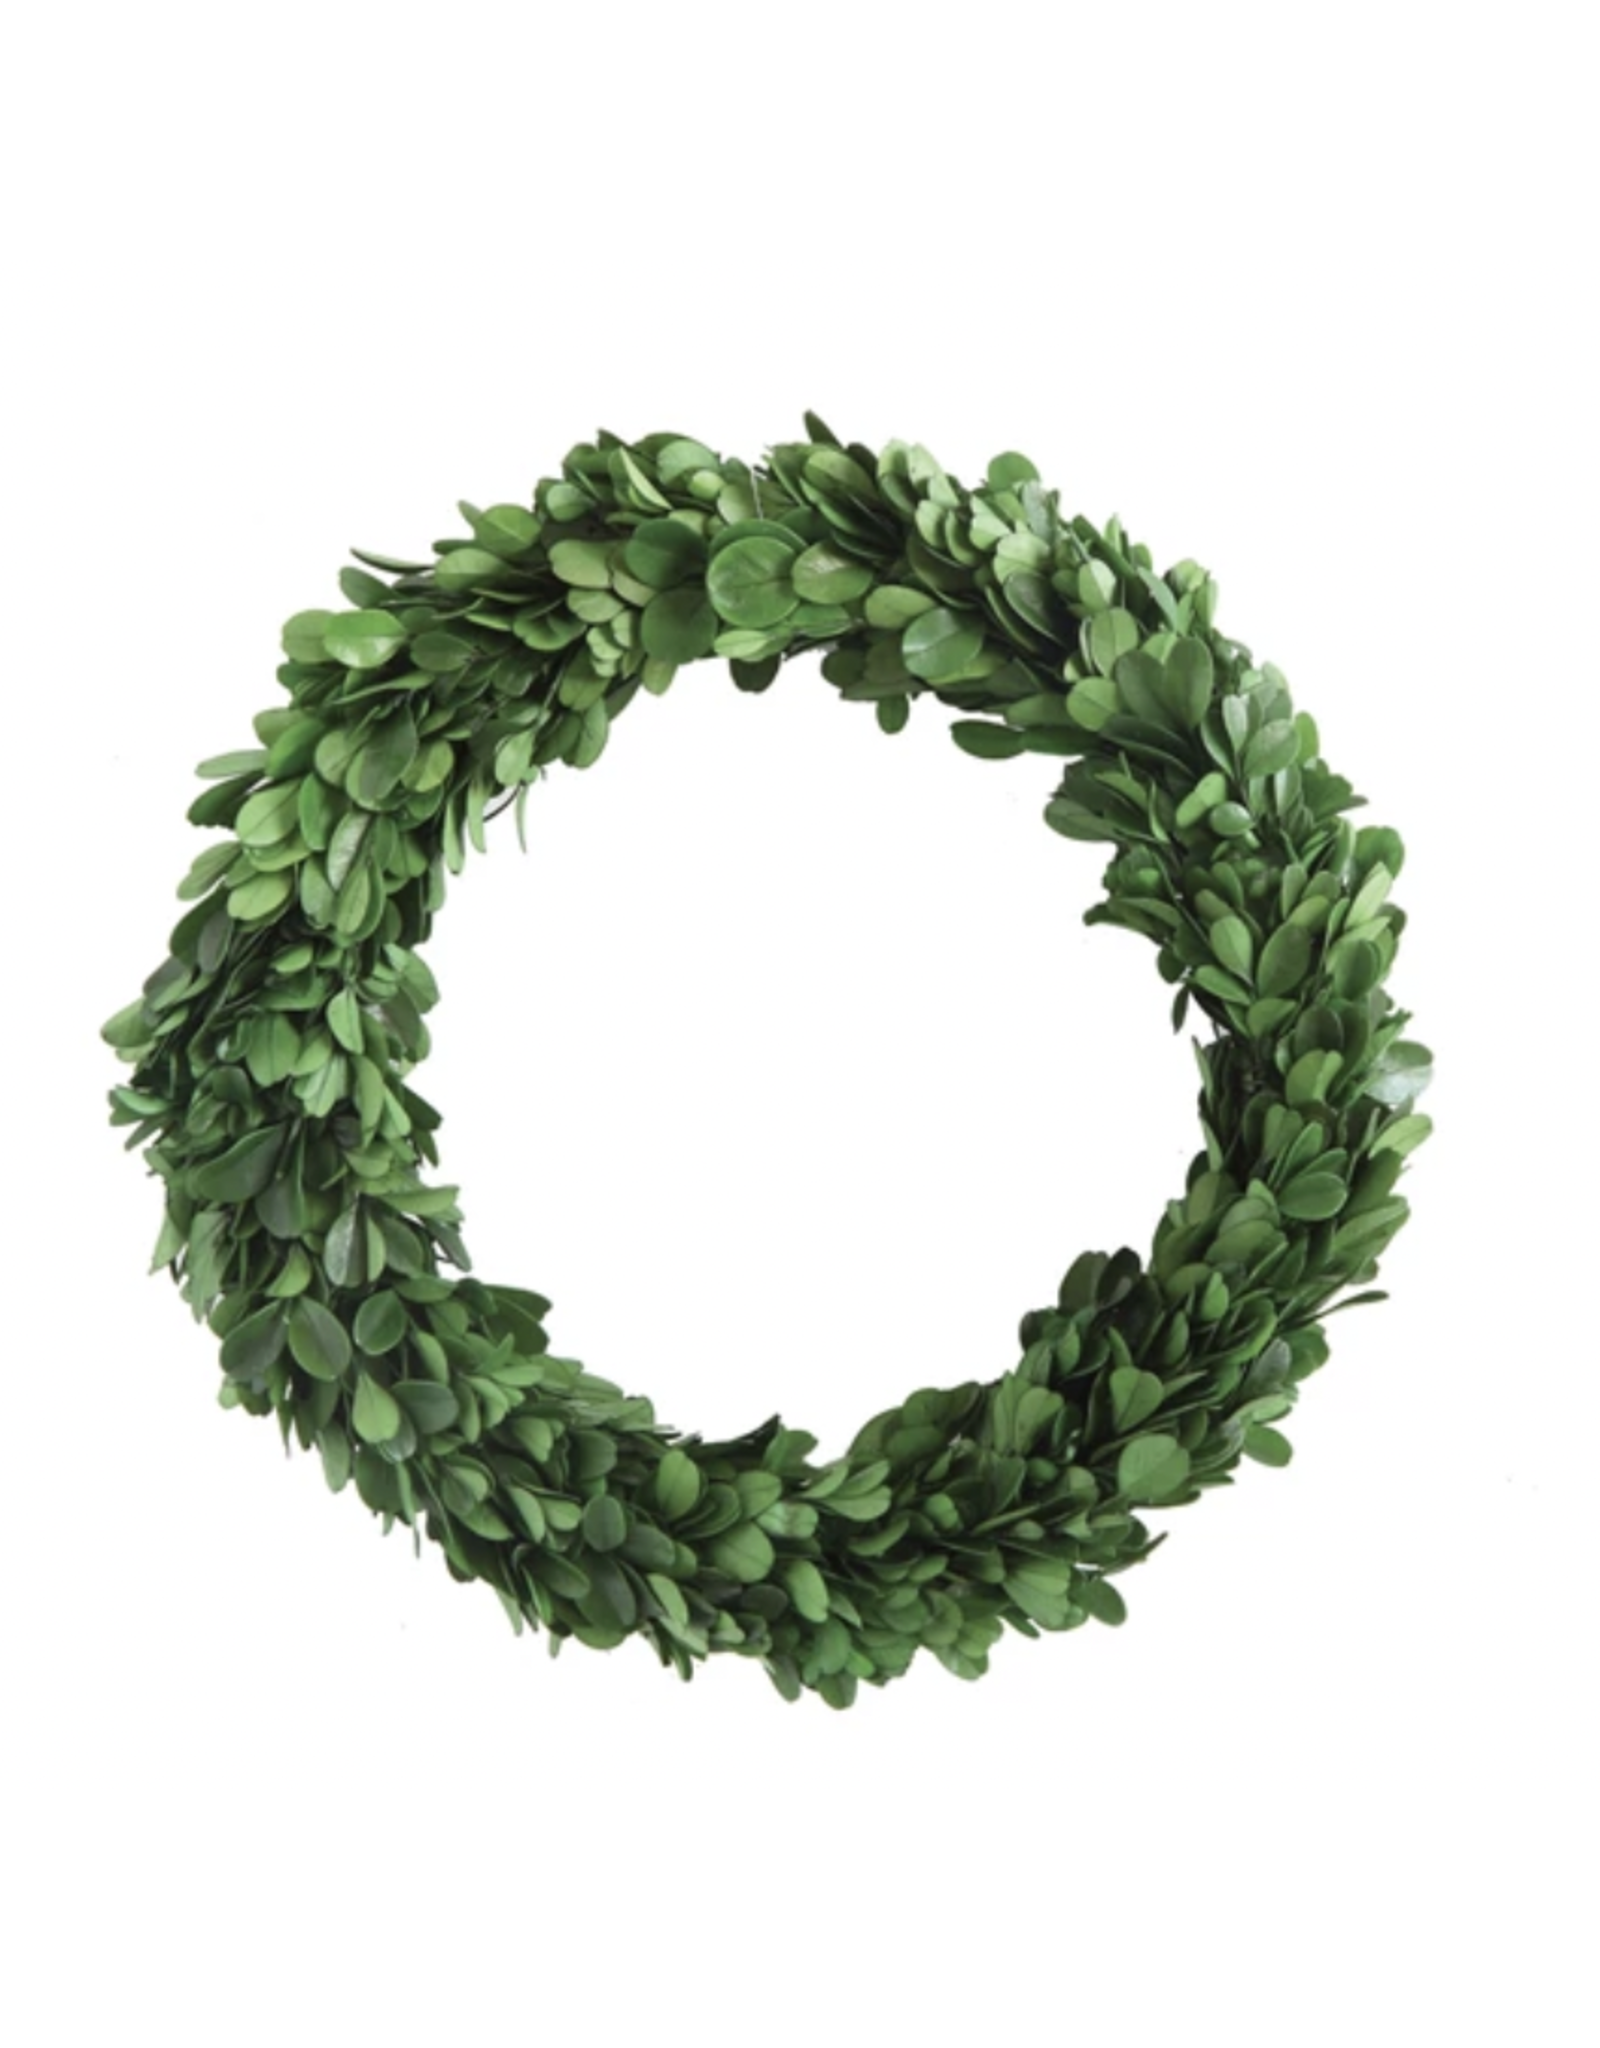 Creative Co-Op Preserved Boxwood Wreath, 9.75"